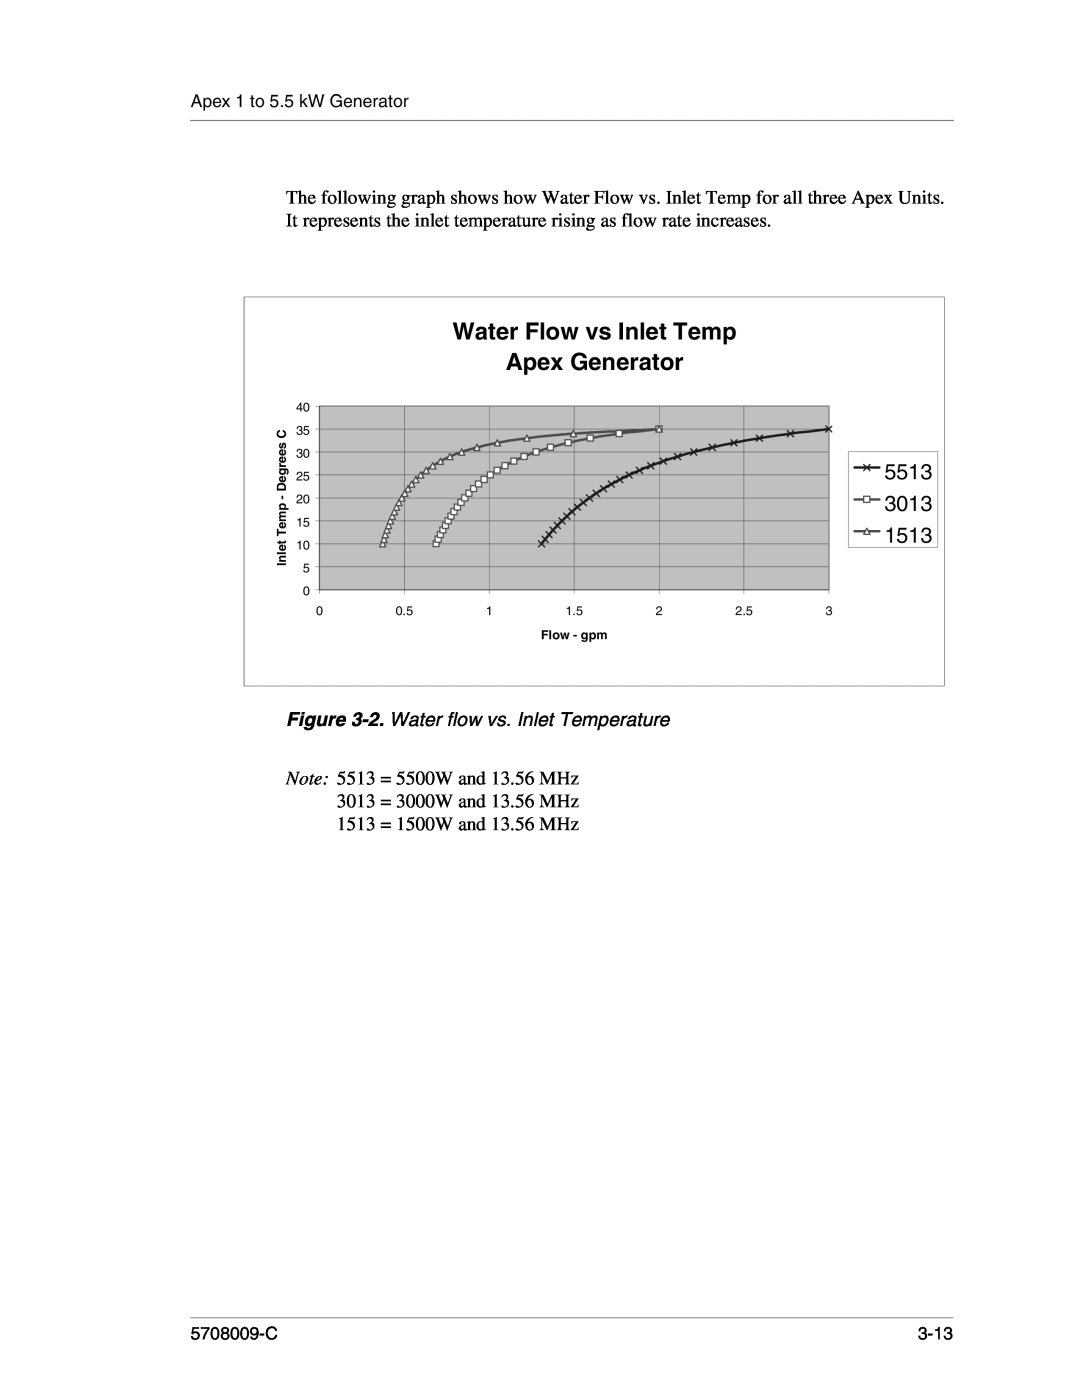 Apex Digital 5708009-C 5513, 3013, 1513, 2. Water flow vs. Inlet Temperature, Water Flow vs Inlet Temp, Apex Generator 